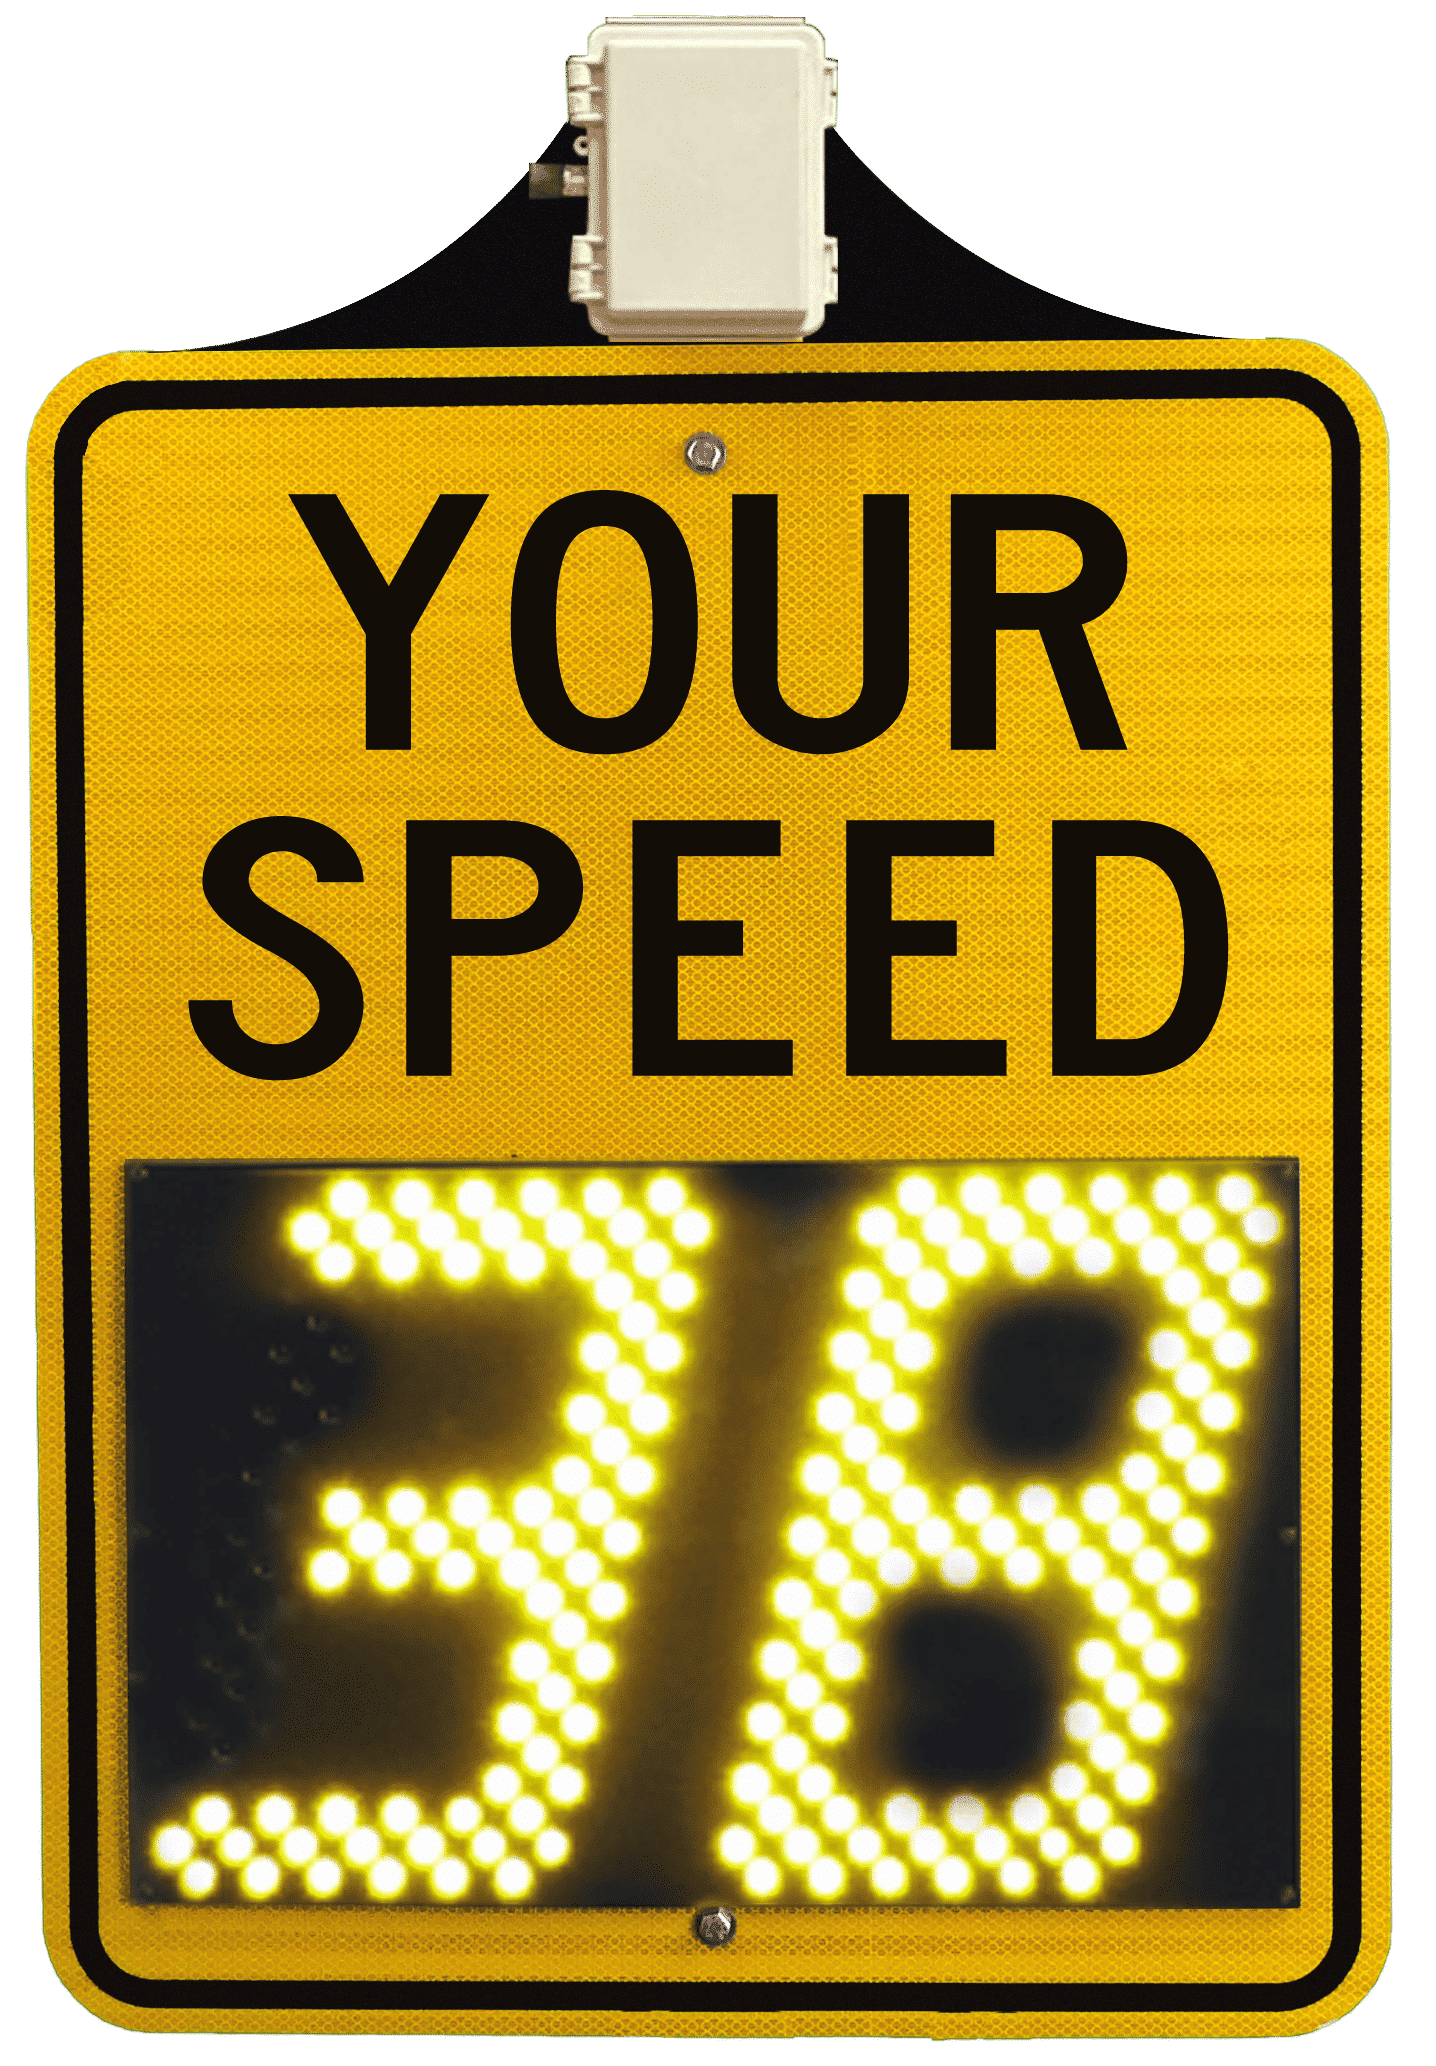 THIN-12 Radar driver feedback sign - Radar speed display sign - Traffic Innovation